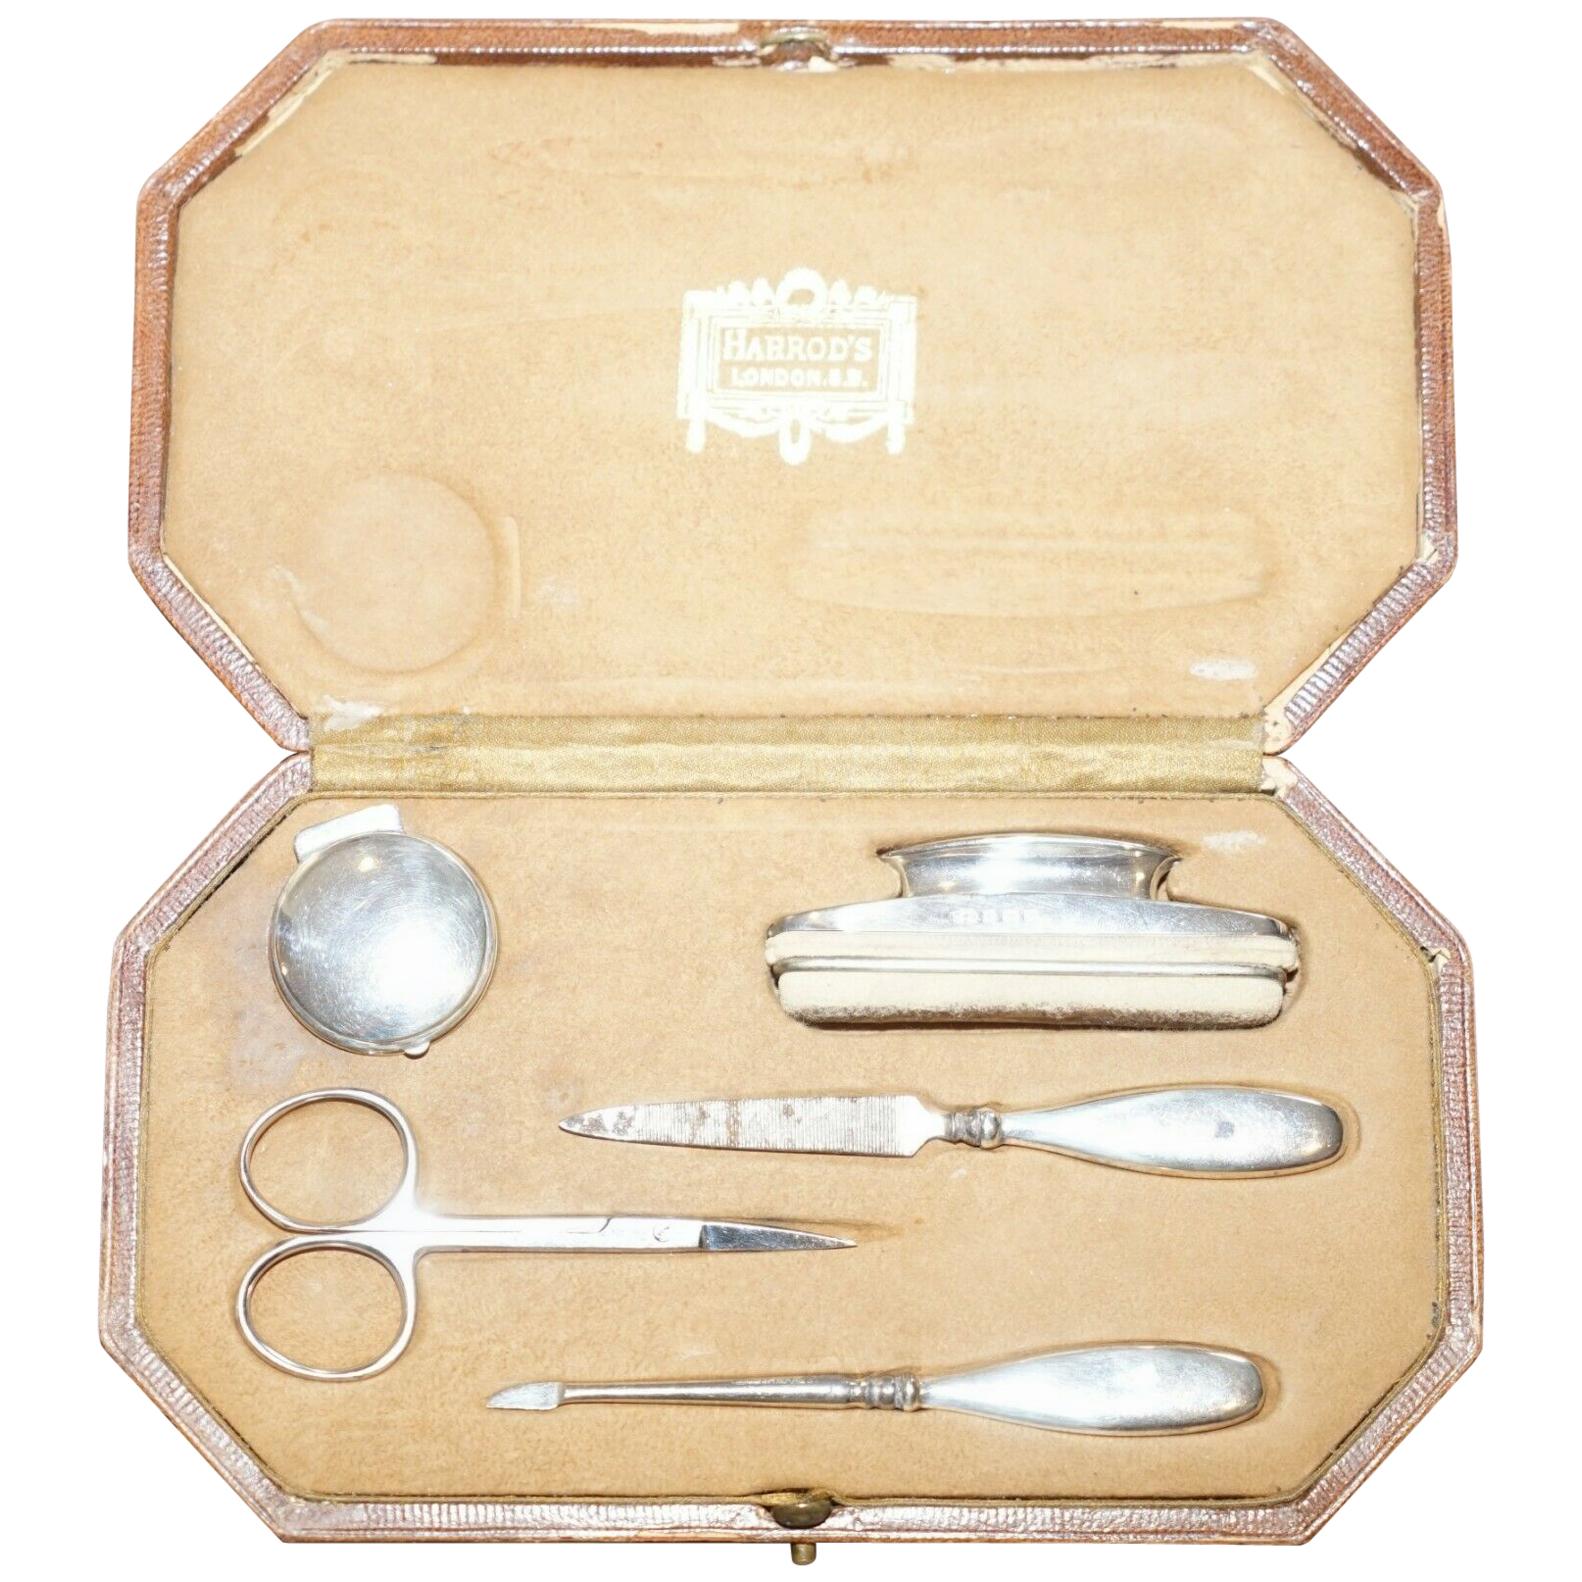 Seltene 1923 Harrods London Sterling Silber Waschtisch Manicure Nagel Set Suite